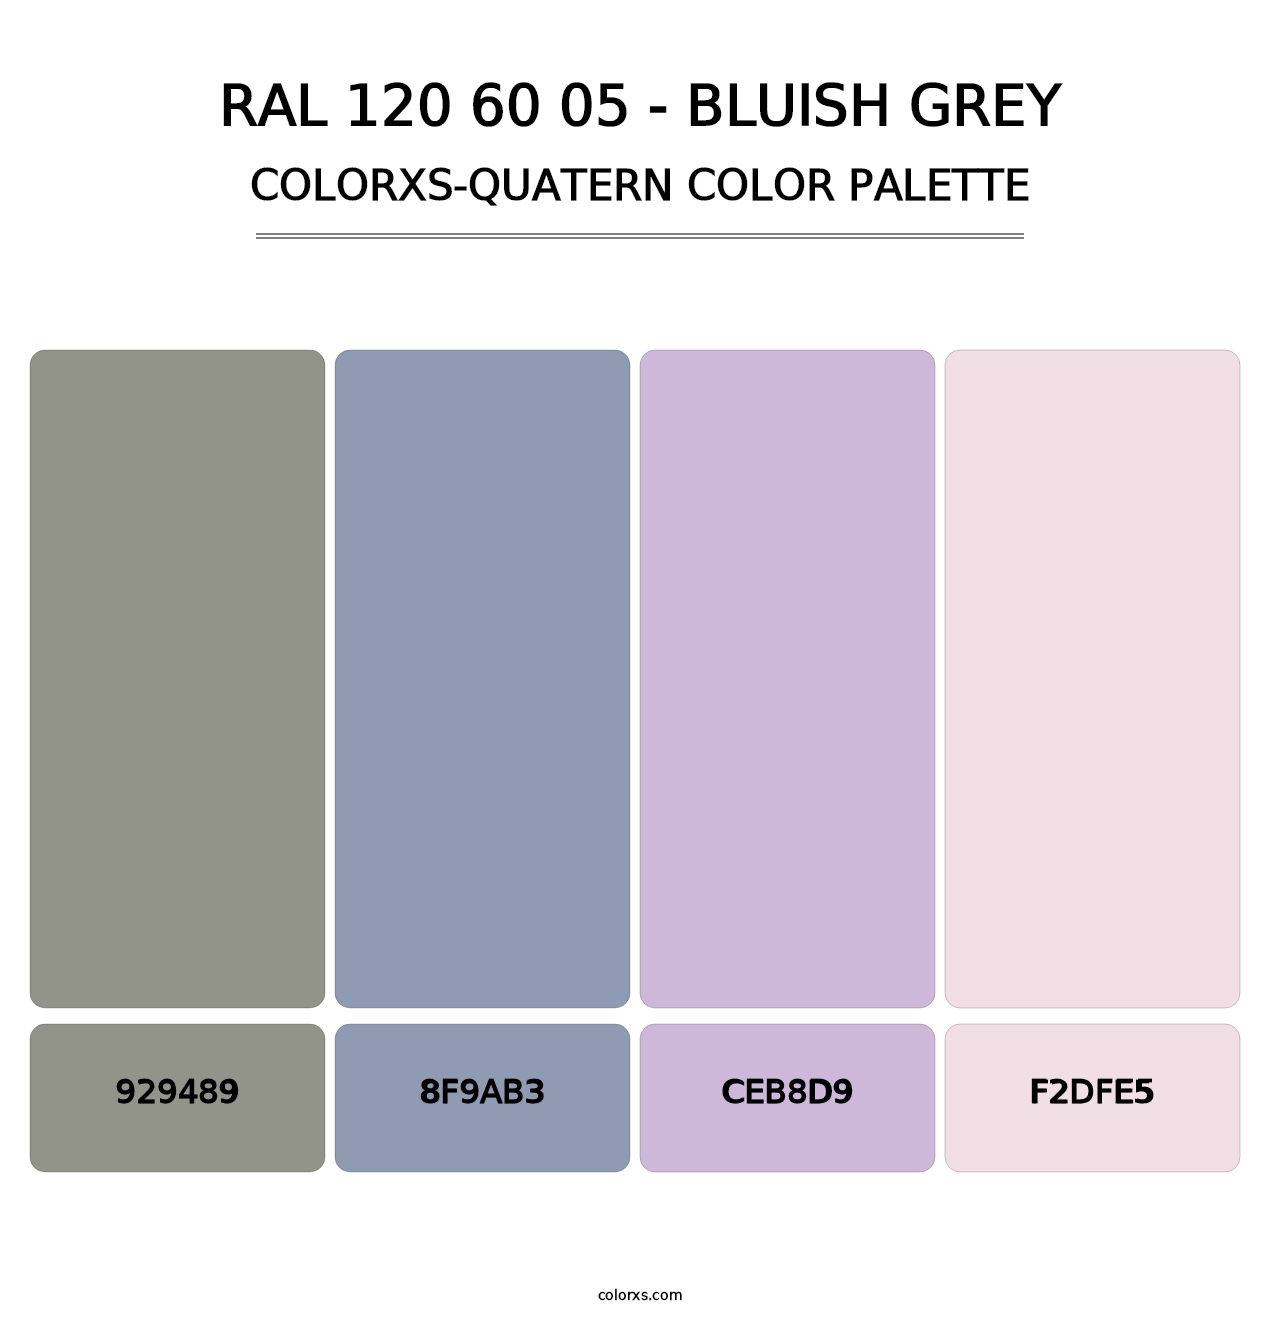 RAL 120 60 05 - Bluish Grey - Colorxs Quatern Palette